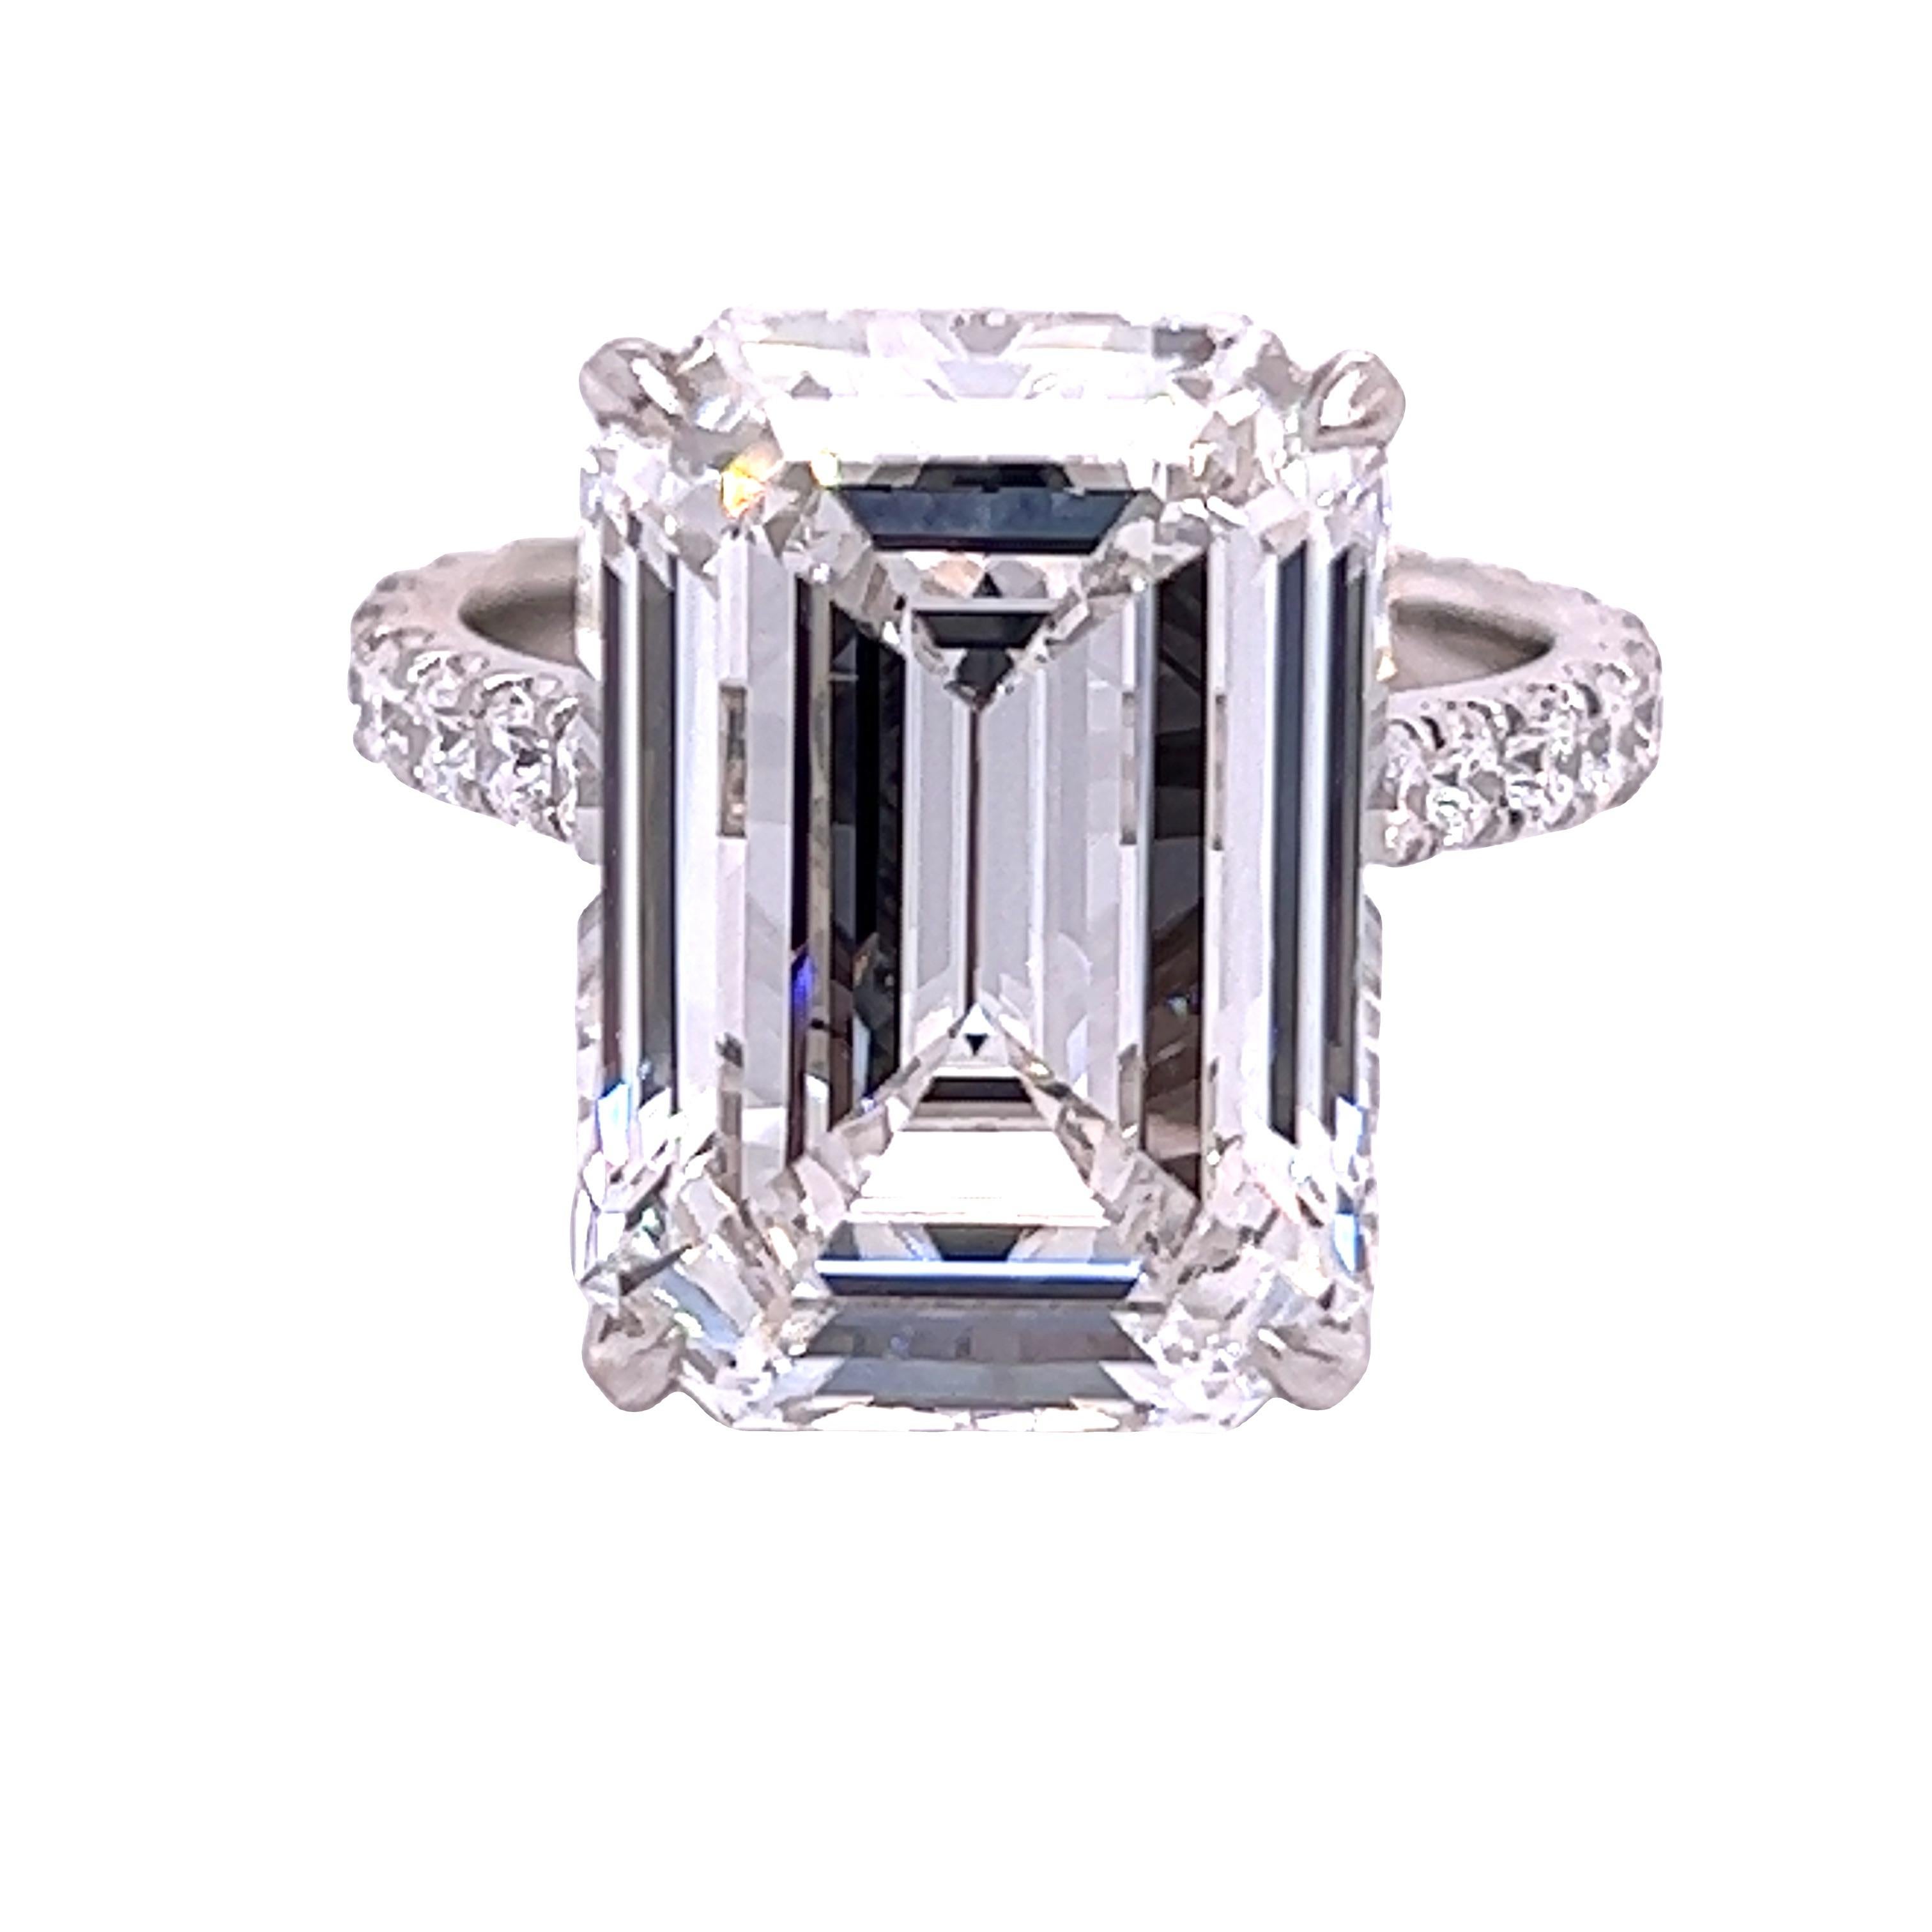 David Rosenberg 10.41 Carat Emerald Cut F VVS2 GIA Diamond Engagement Ring In New Condition For Sale In Boca Raton, FL